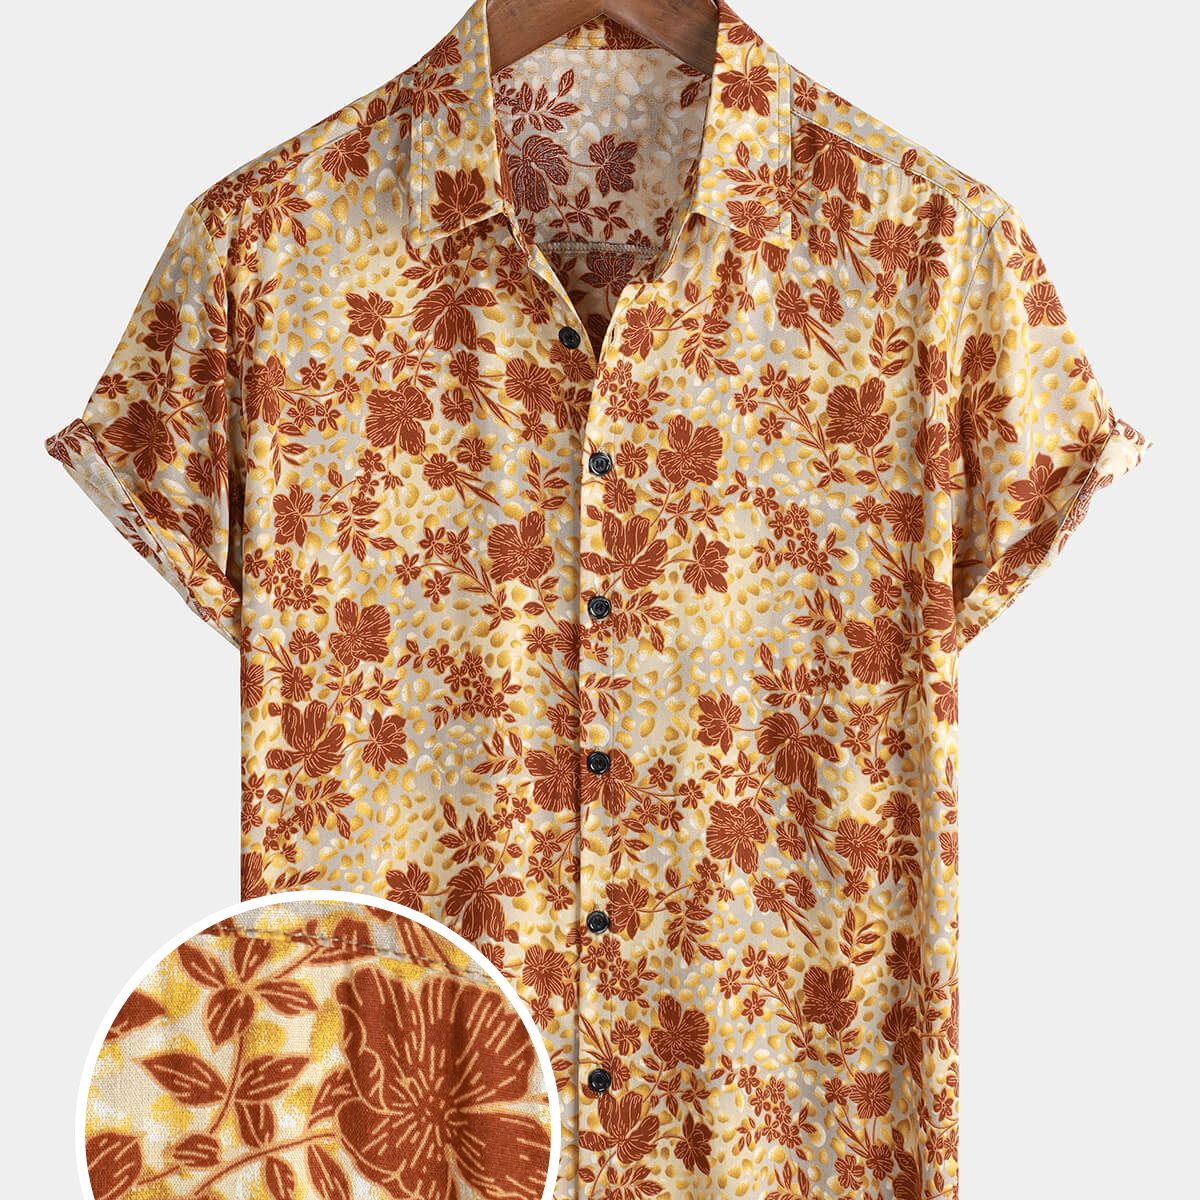 Men's Casual Summer Floral Vintage Short Sleeve Button Up Shirt